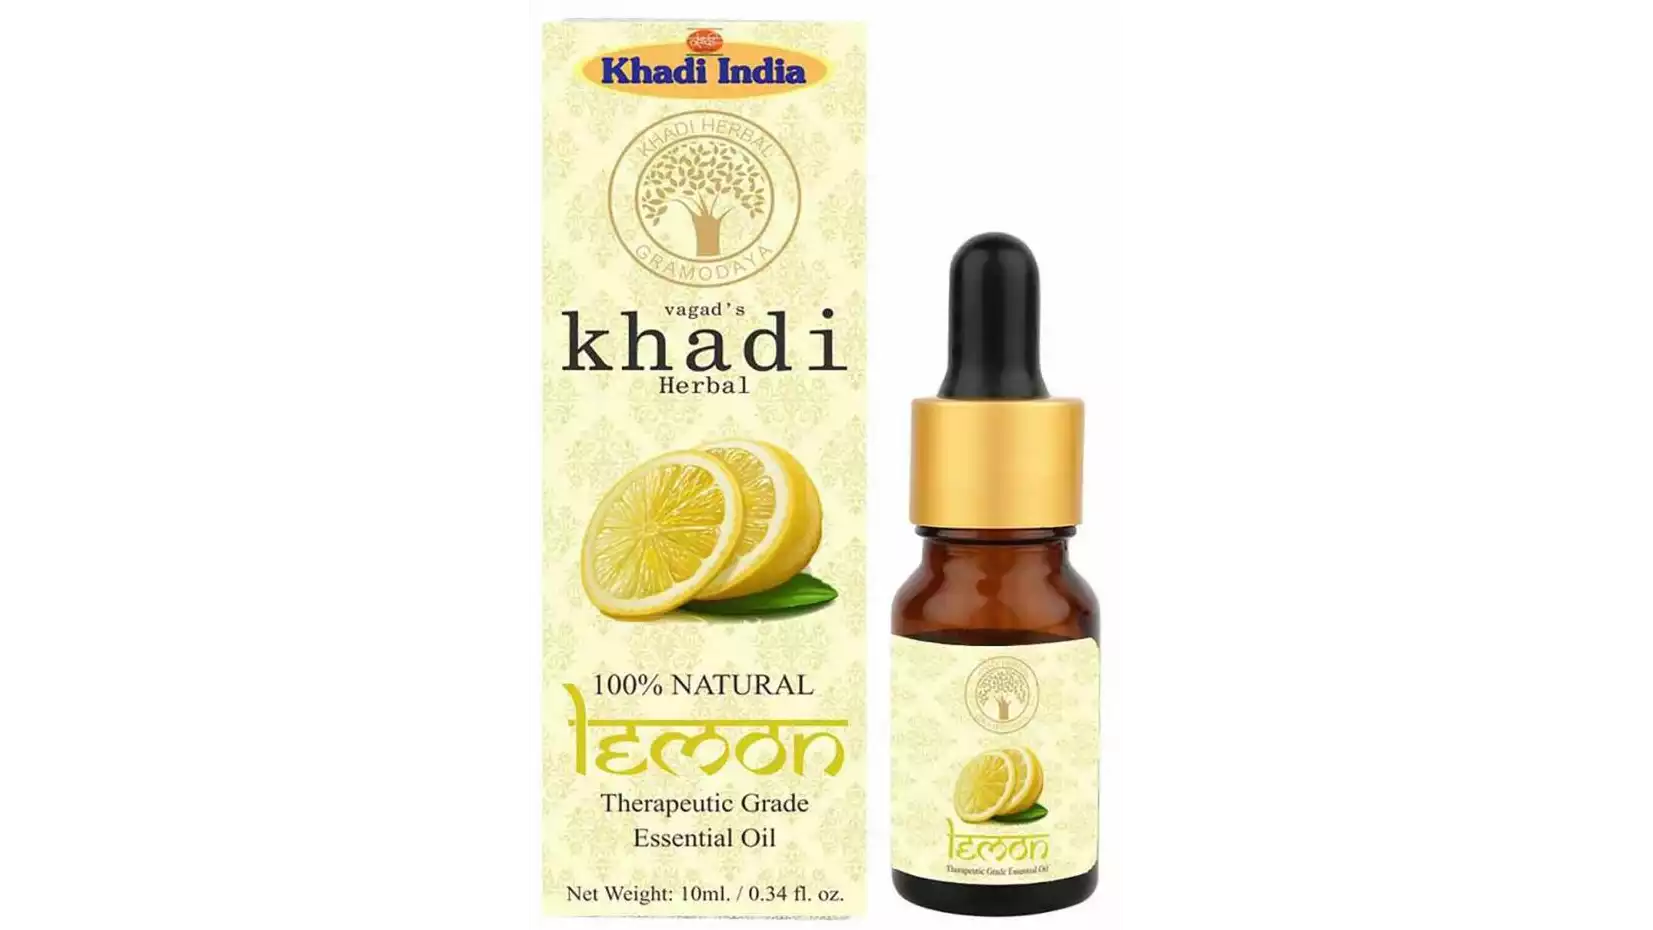 Vagads Khadi Lemon Essential Oil (10ml)